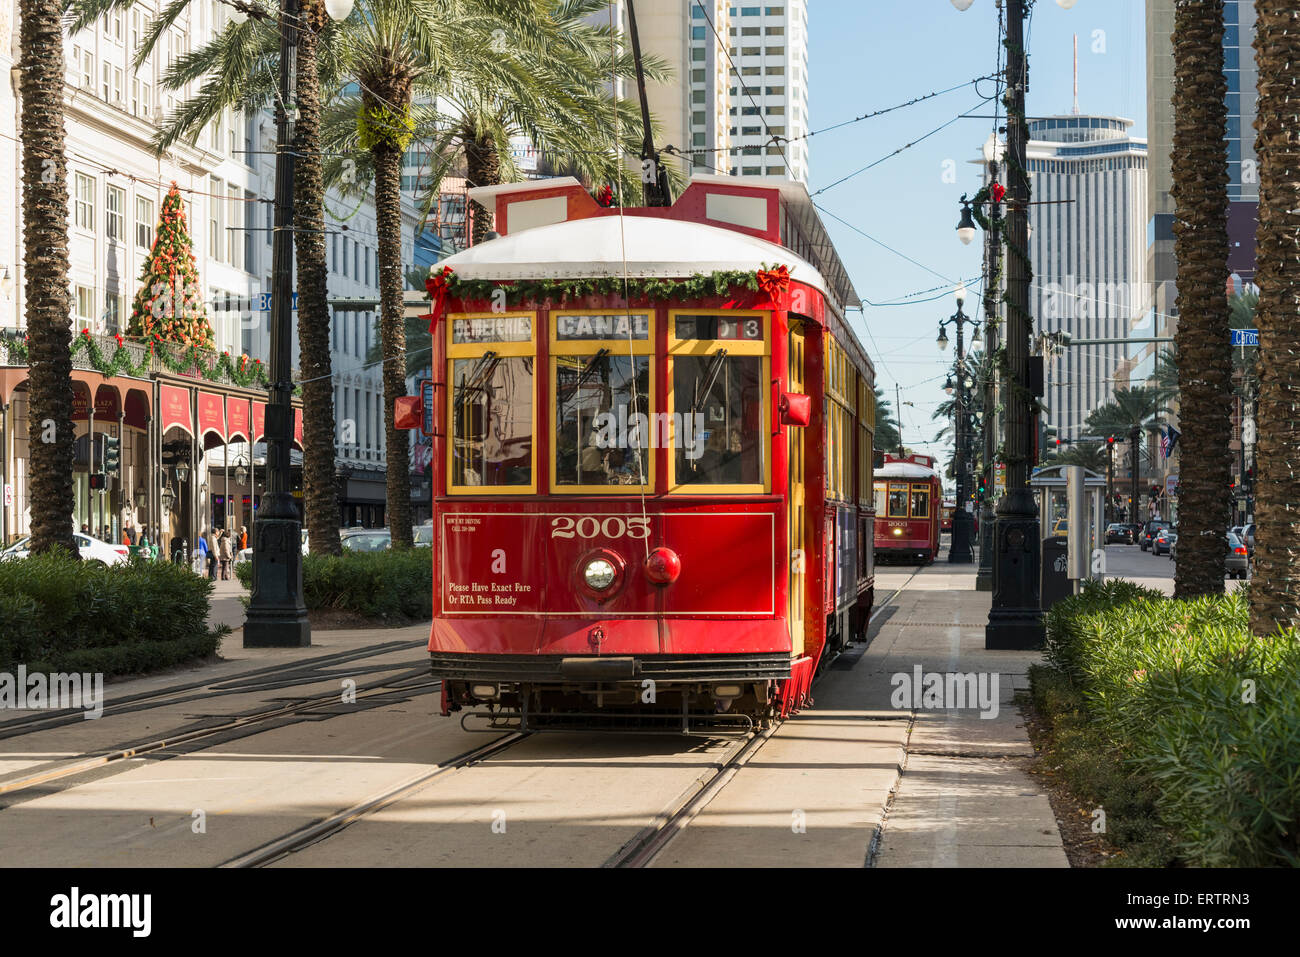 Il tram tram di Canal Street, New Orleans French Quarter, Louisiana, Stati Uniti d'America Foto Stock